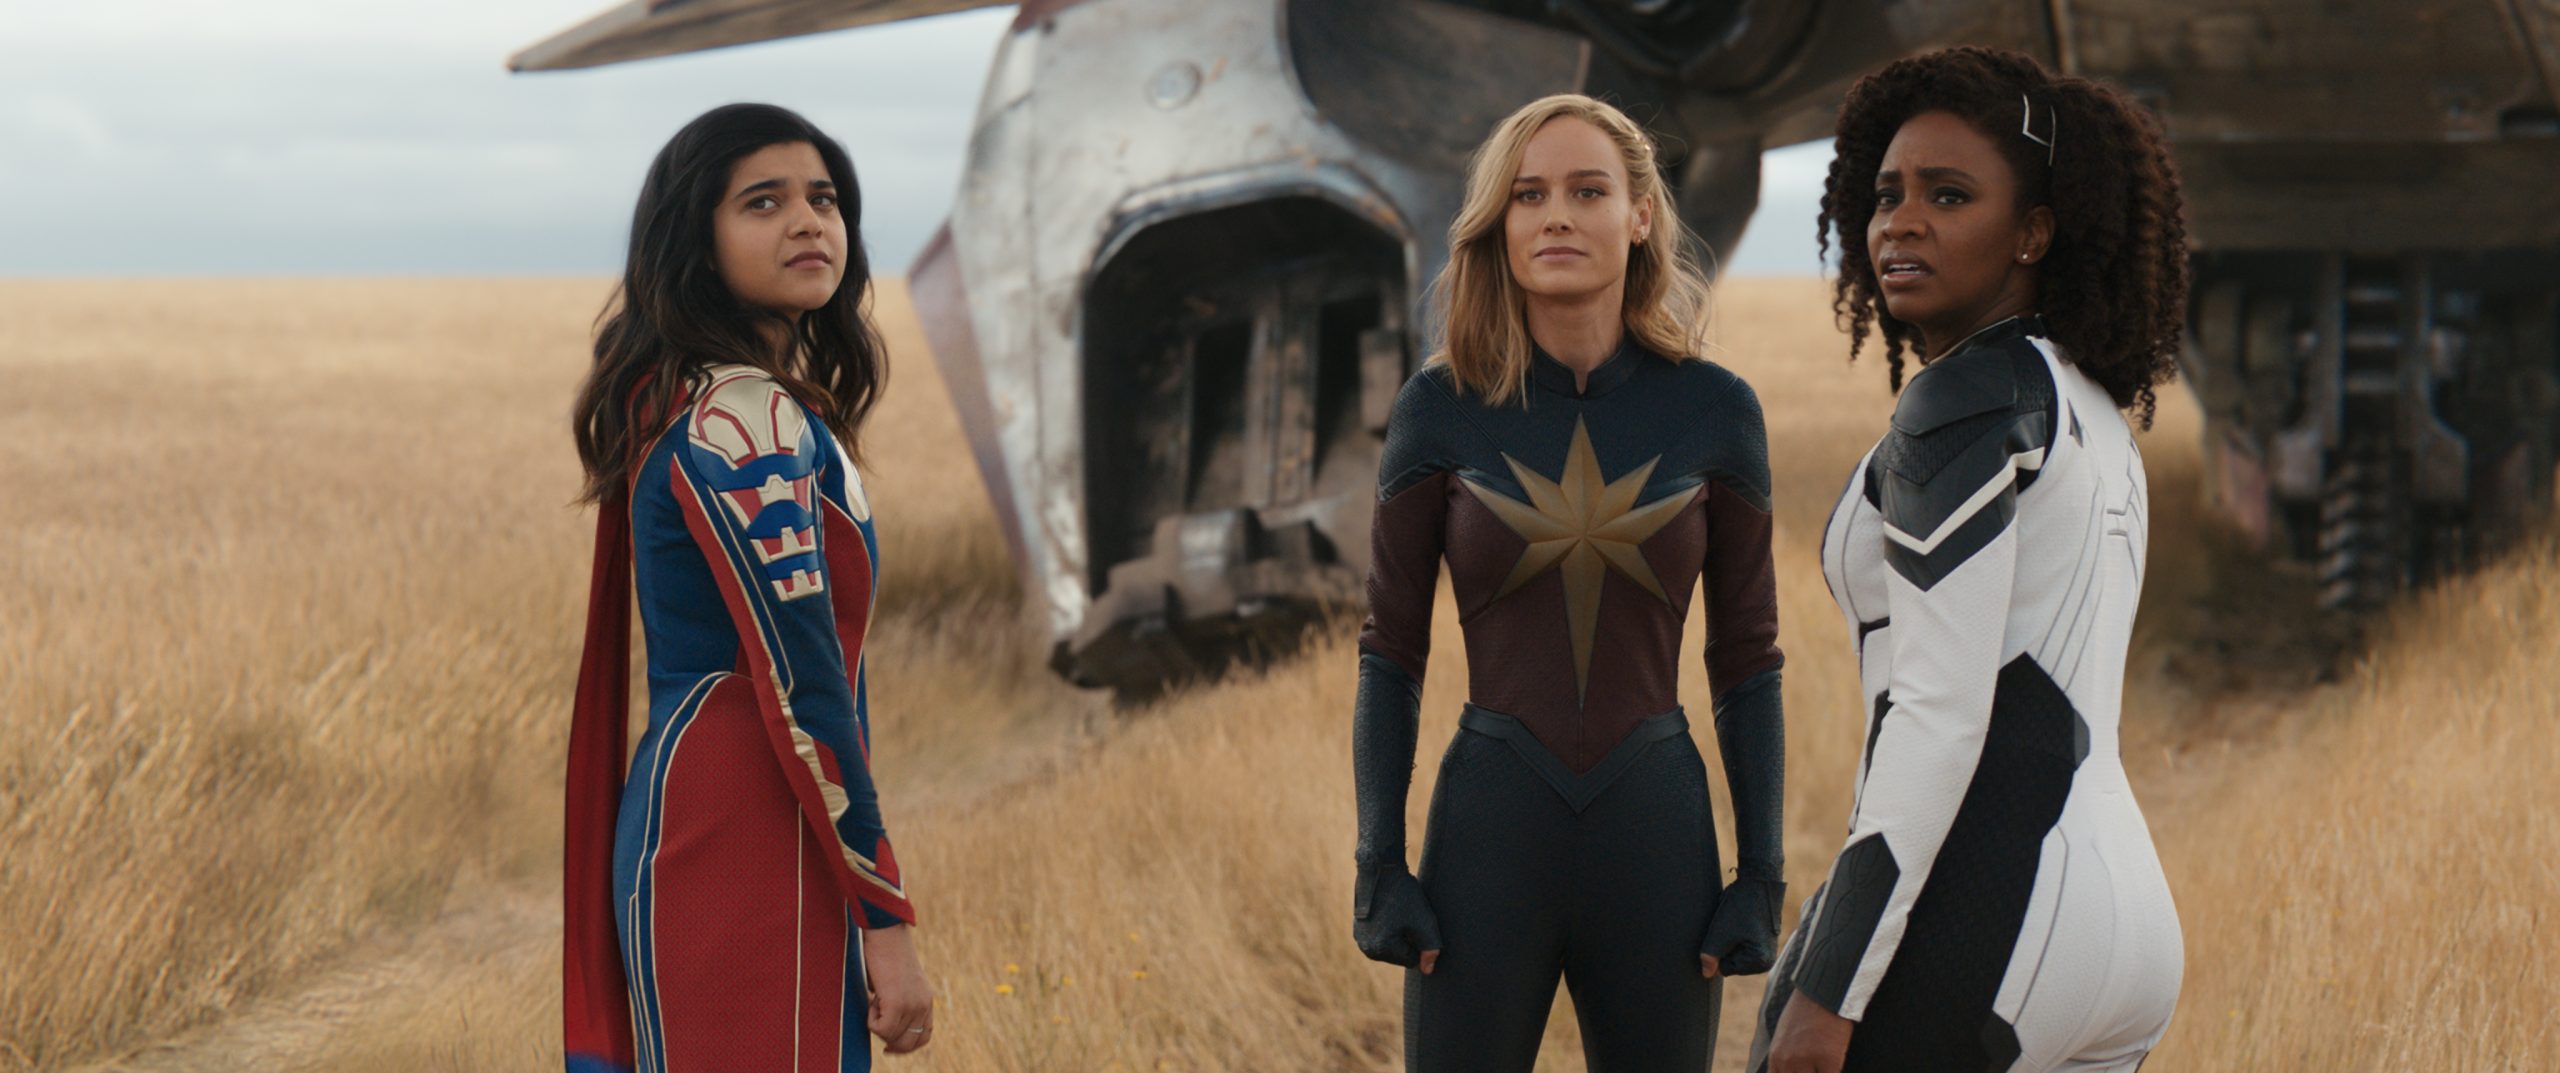 Ms. Marvel' Fans on Reddit Figured Out if Brie Larson's Captain